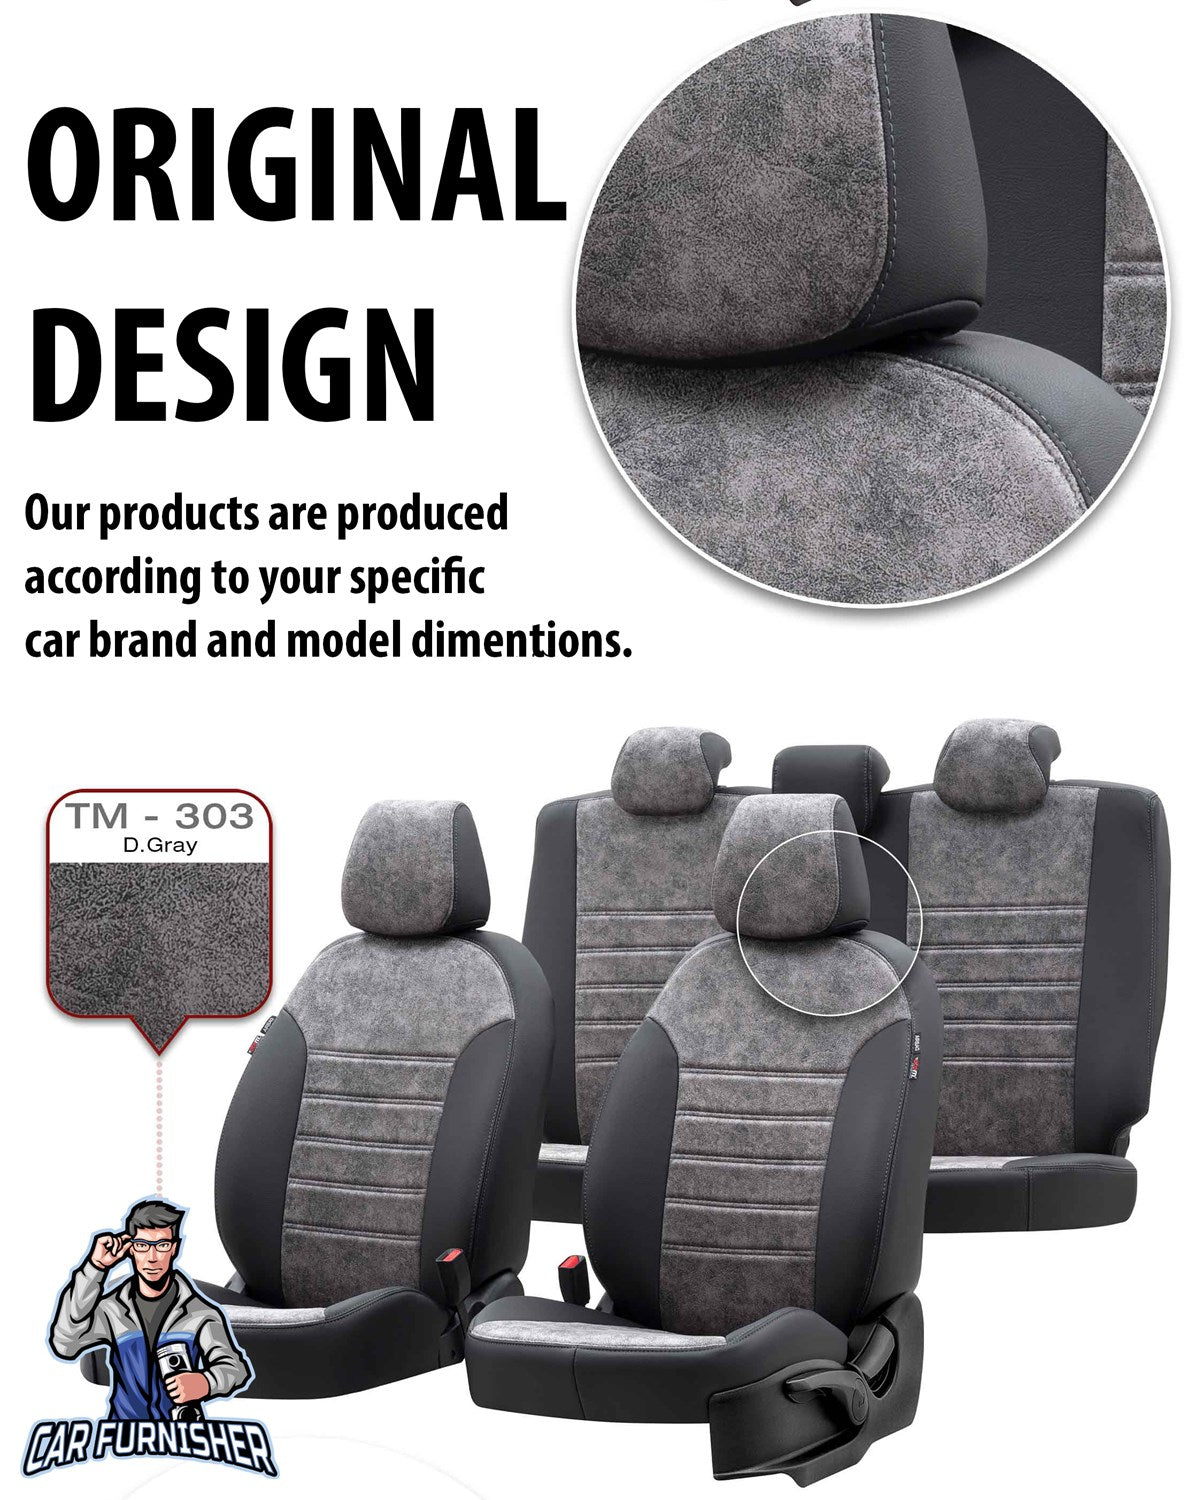 Chery Tiggo Seat Covers Milano Suede Design Smoked Black Leather & Suede Fabric